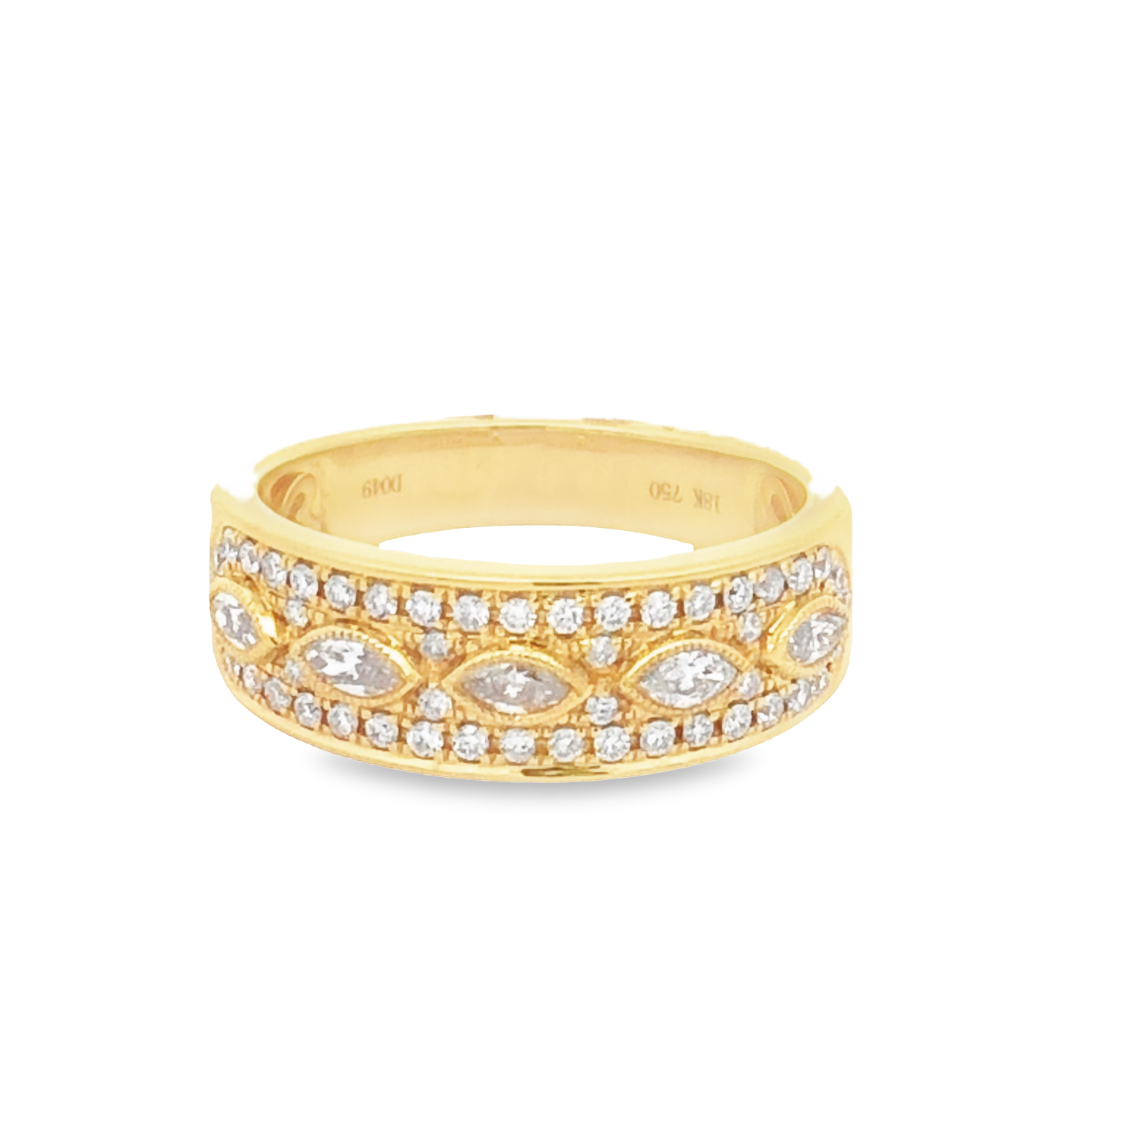 18K Yellow Gold Diamond Fashion Ring